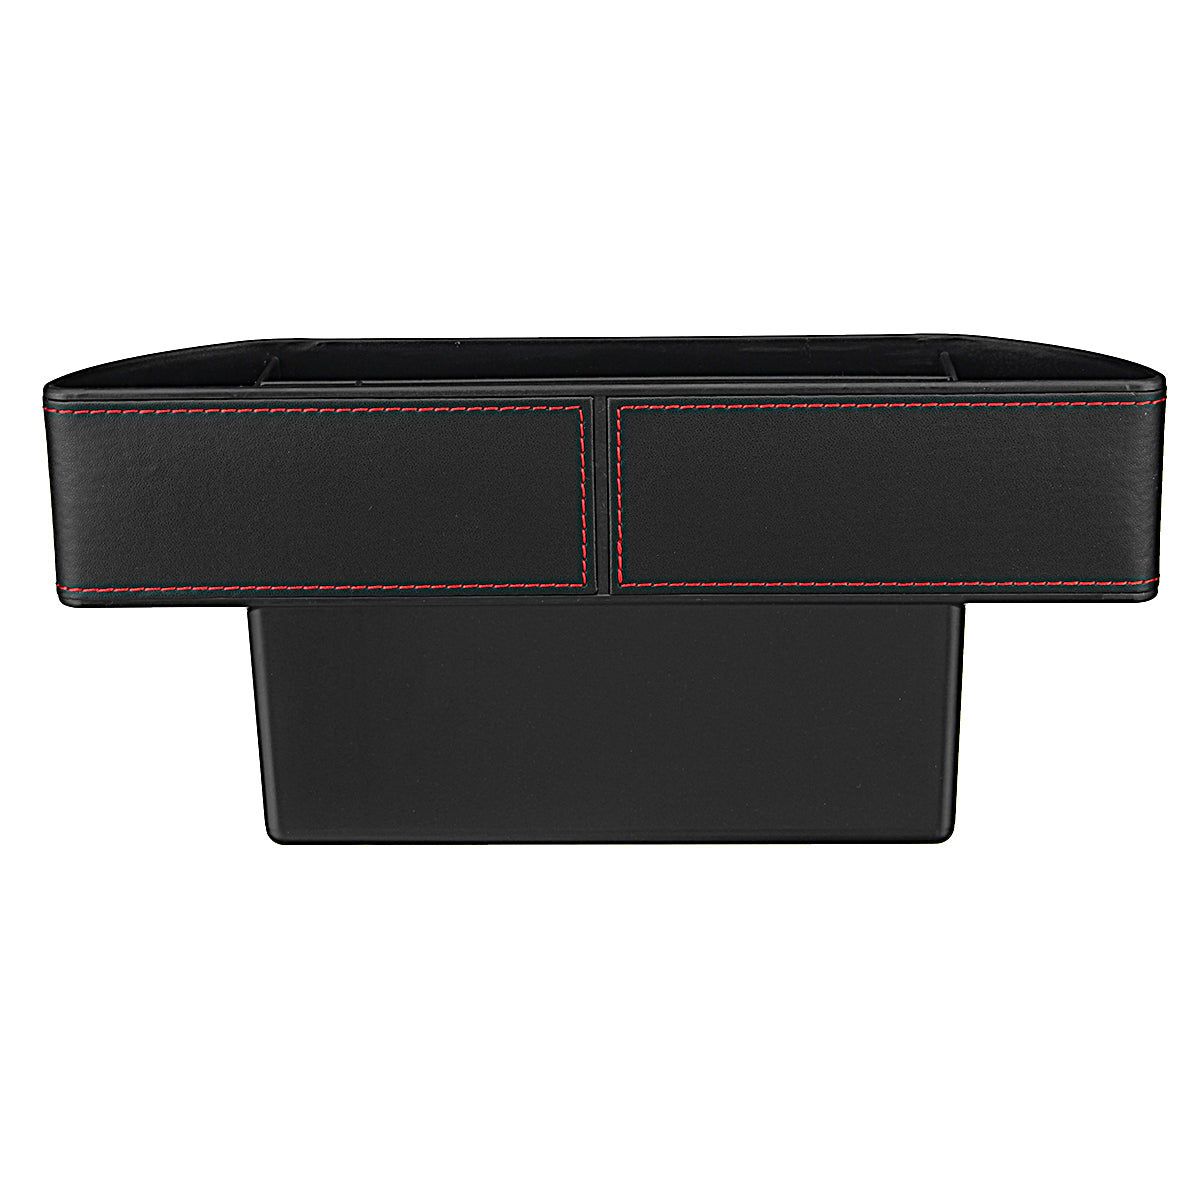 Multiple Grid PU Car Seat Crevice Storage Box Seat Gap Organizer Pocket Phone Holder - Auto GoShop